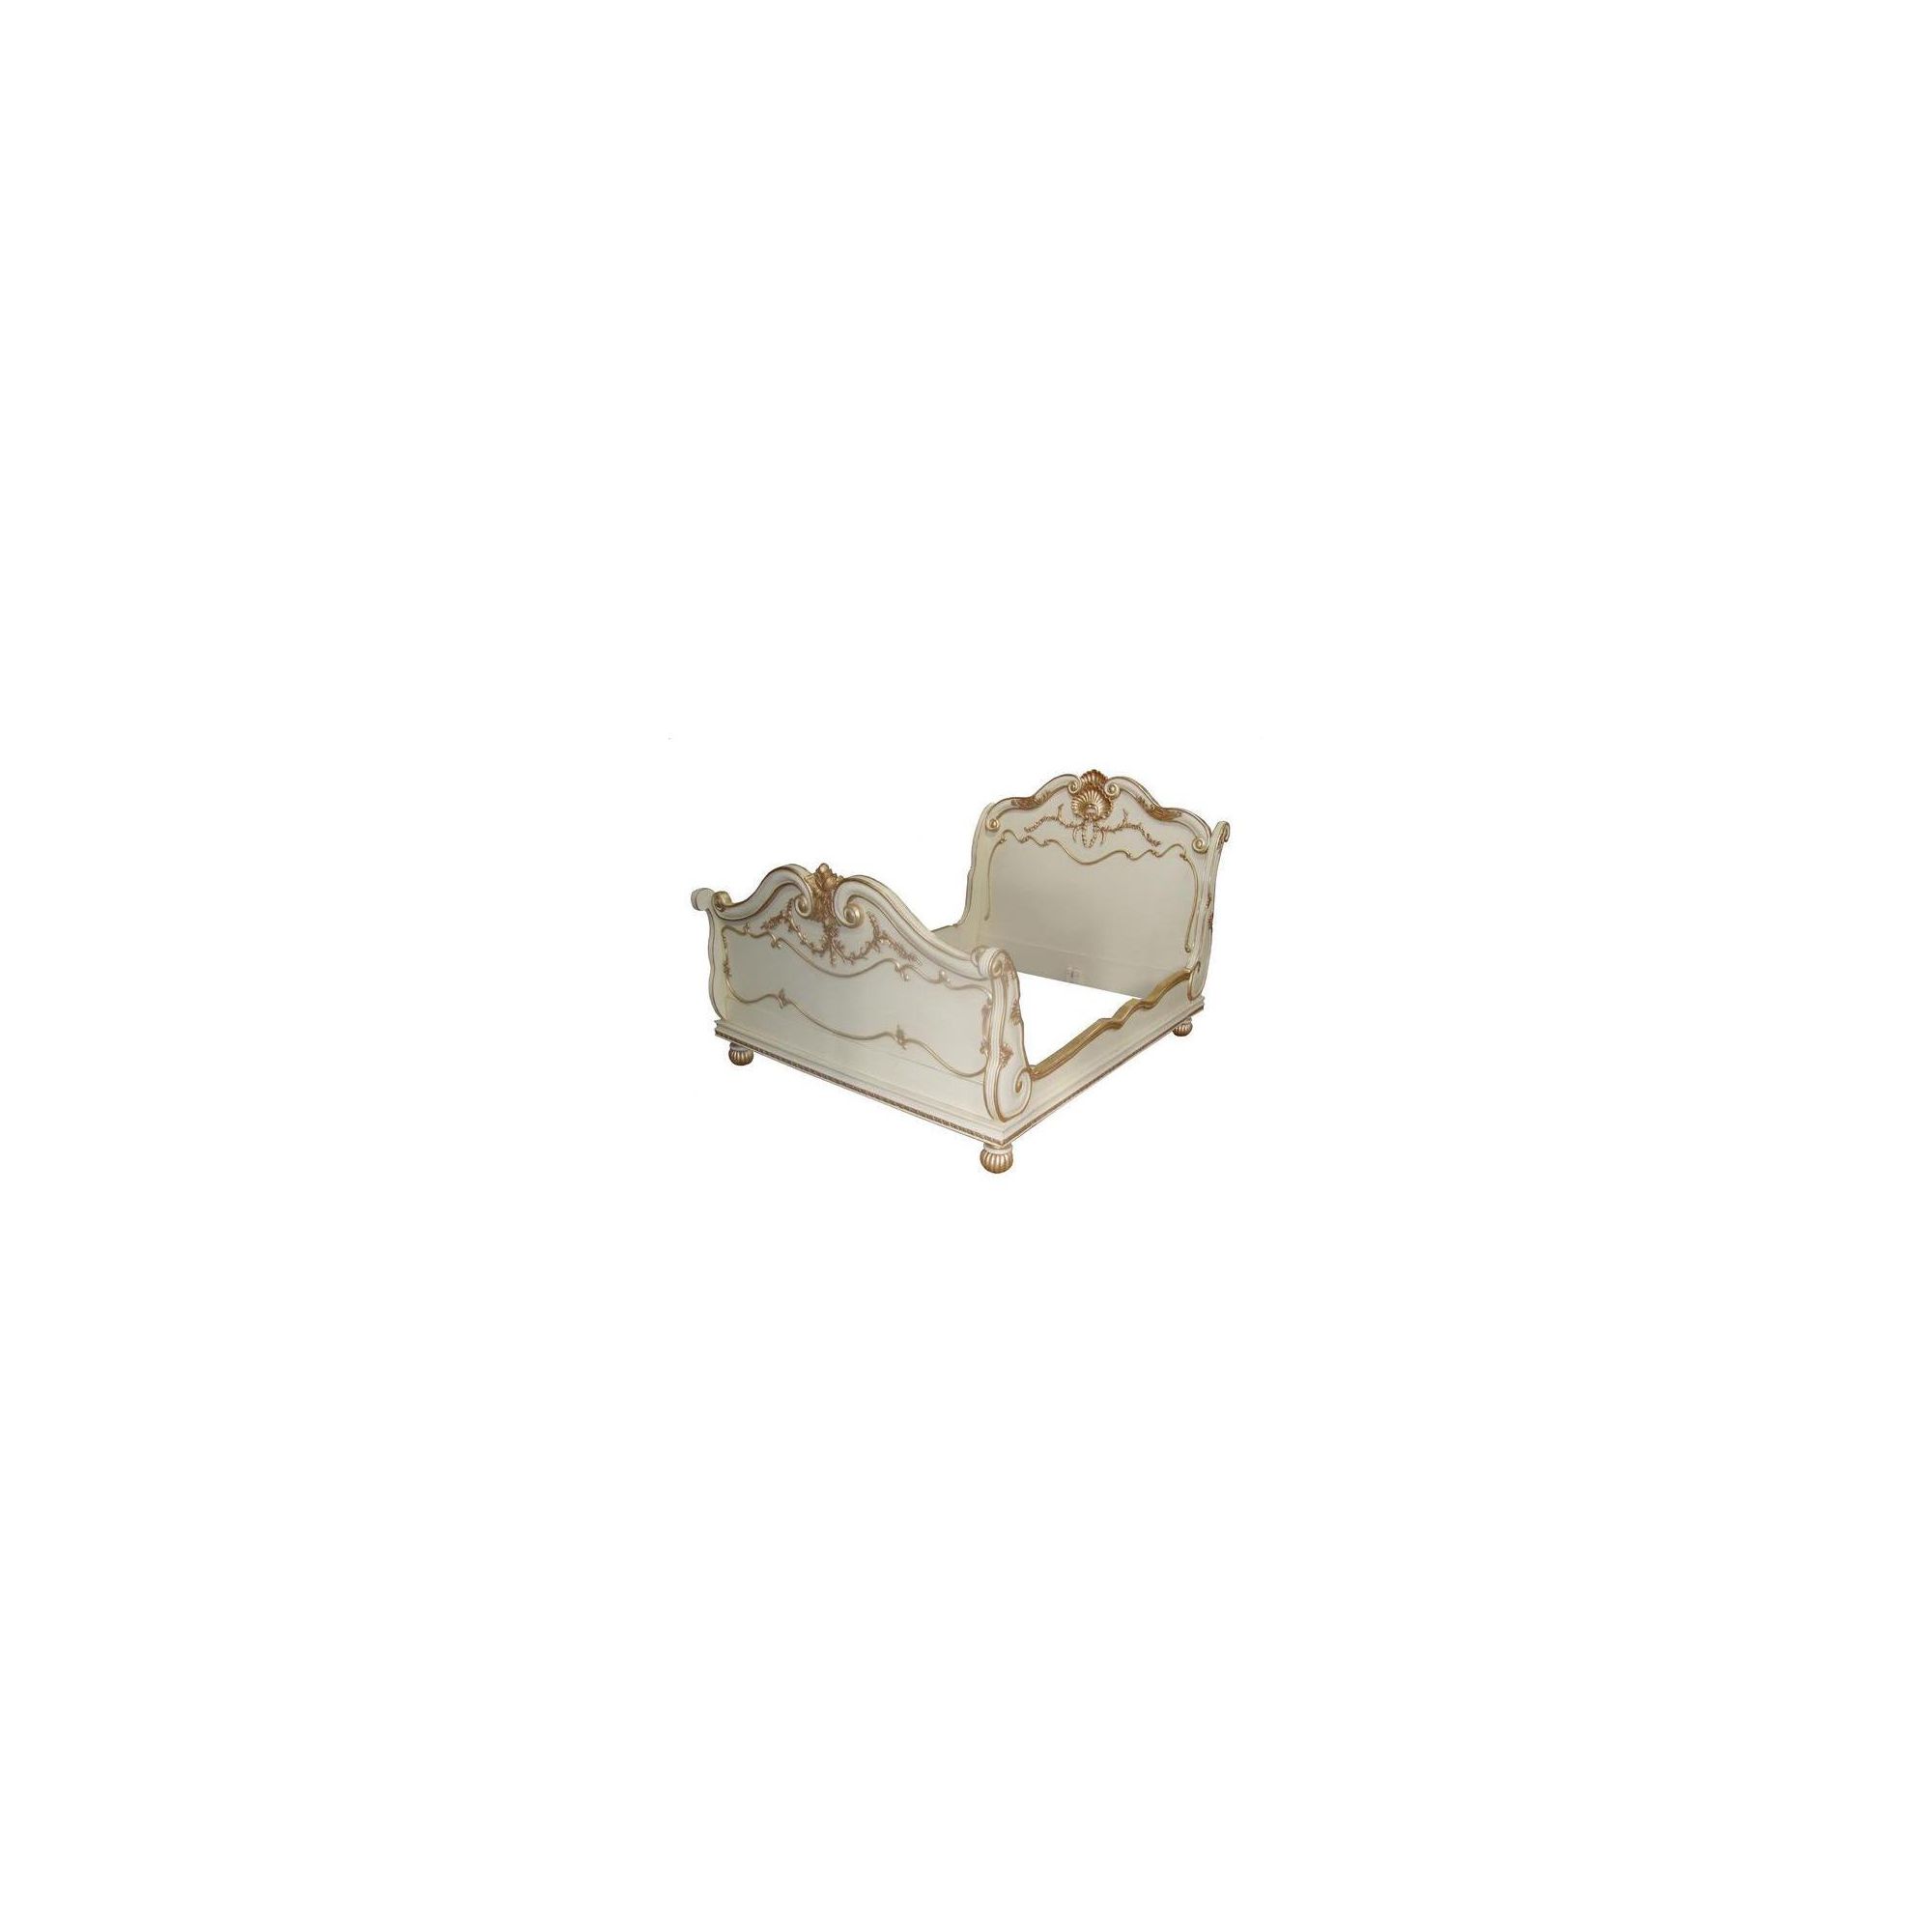 Lock stock and barrel Mahogany Shell Bed in Mahogany - Double - Antique White at Tesco Direct